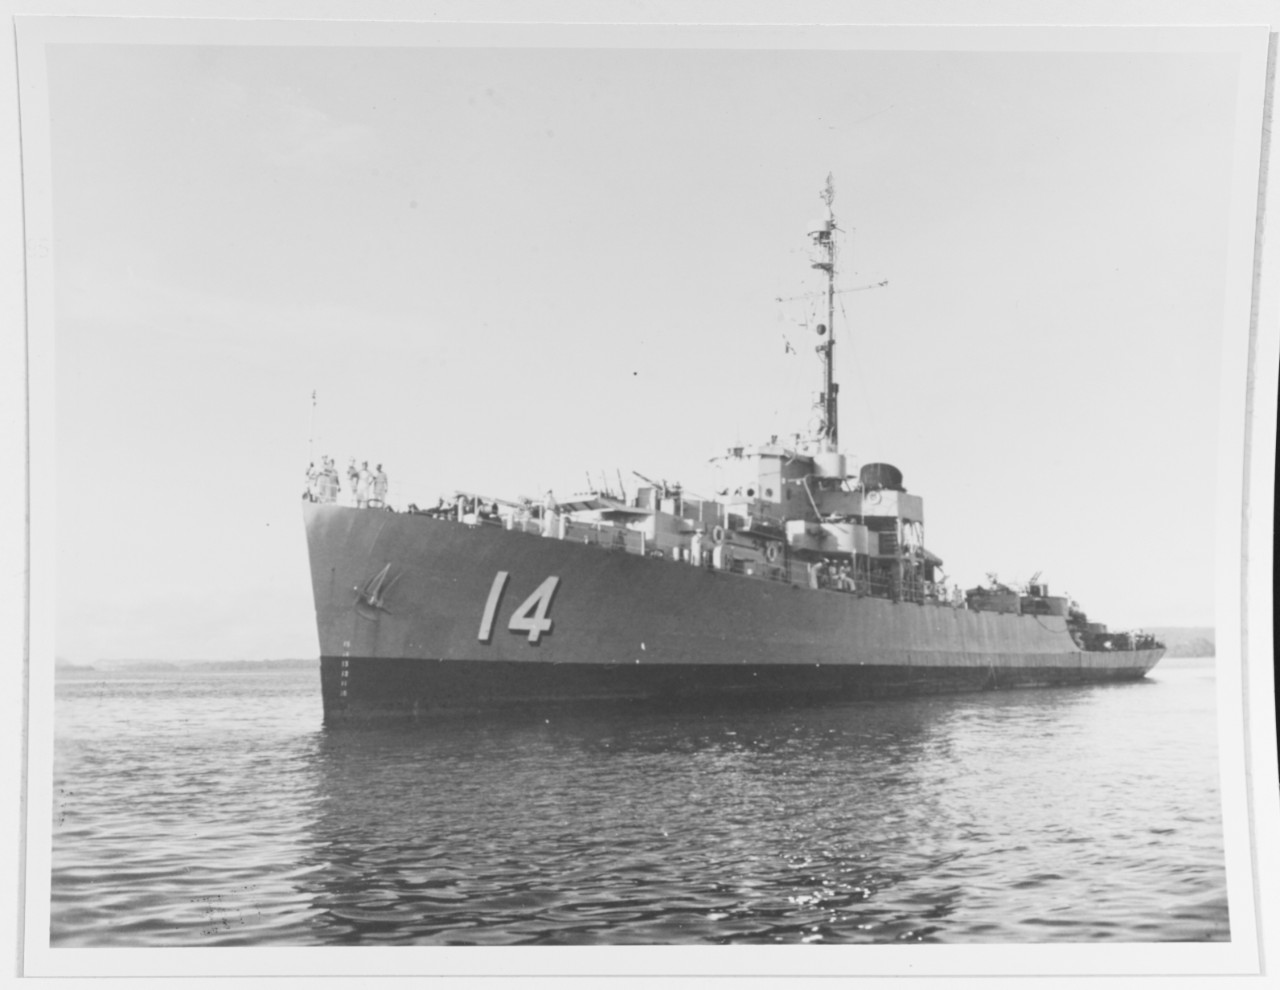 ALMIRANTE BRION Columbian Frigate, ex-USS BURLINGTON (PF-51)